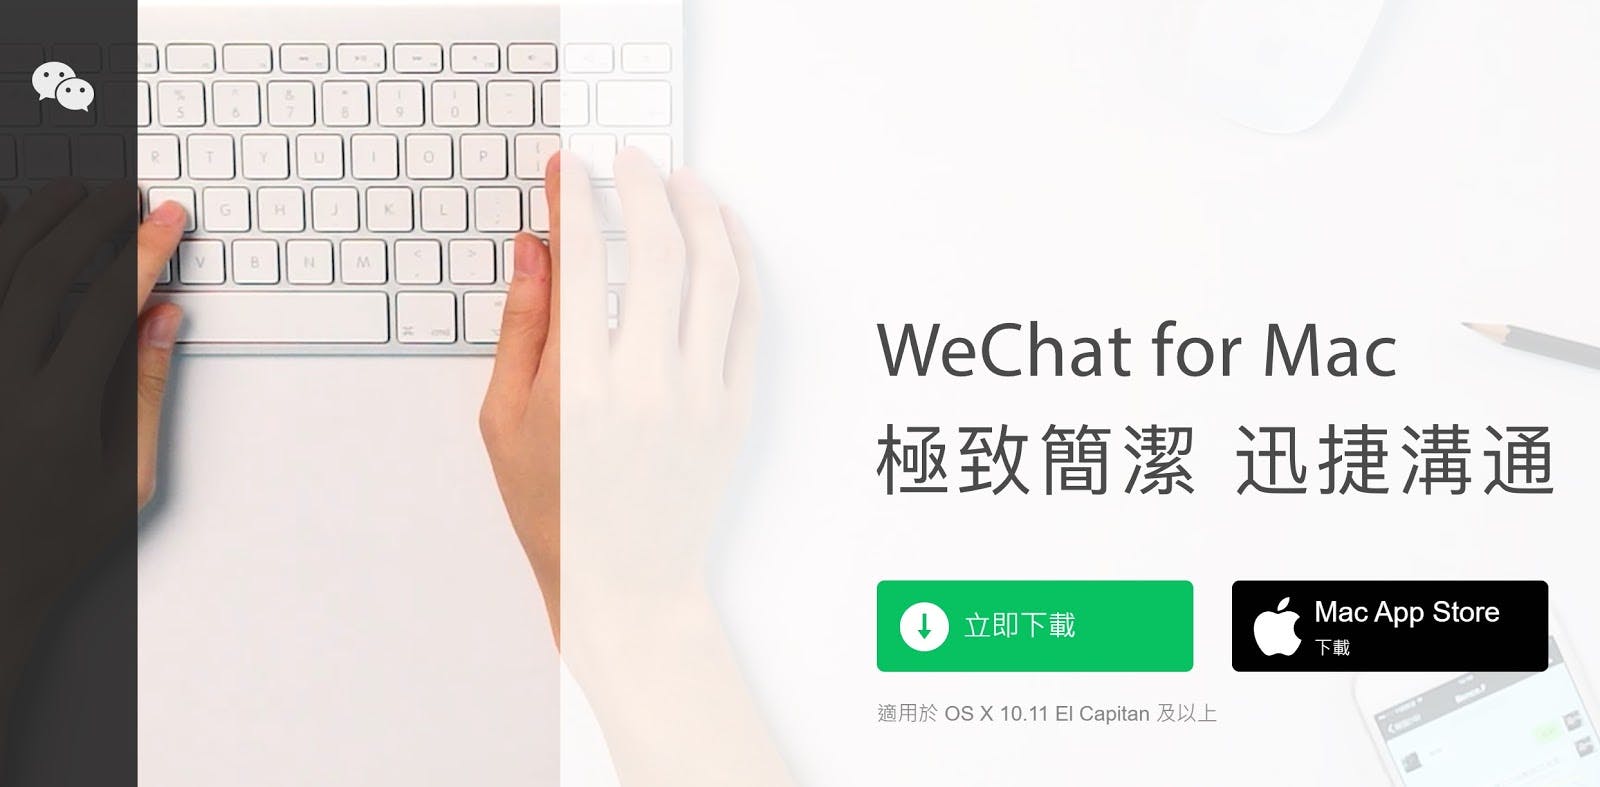 wechat web for mac 微信網頁版